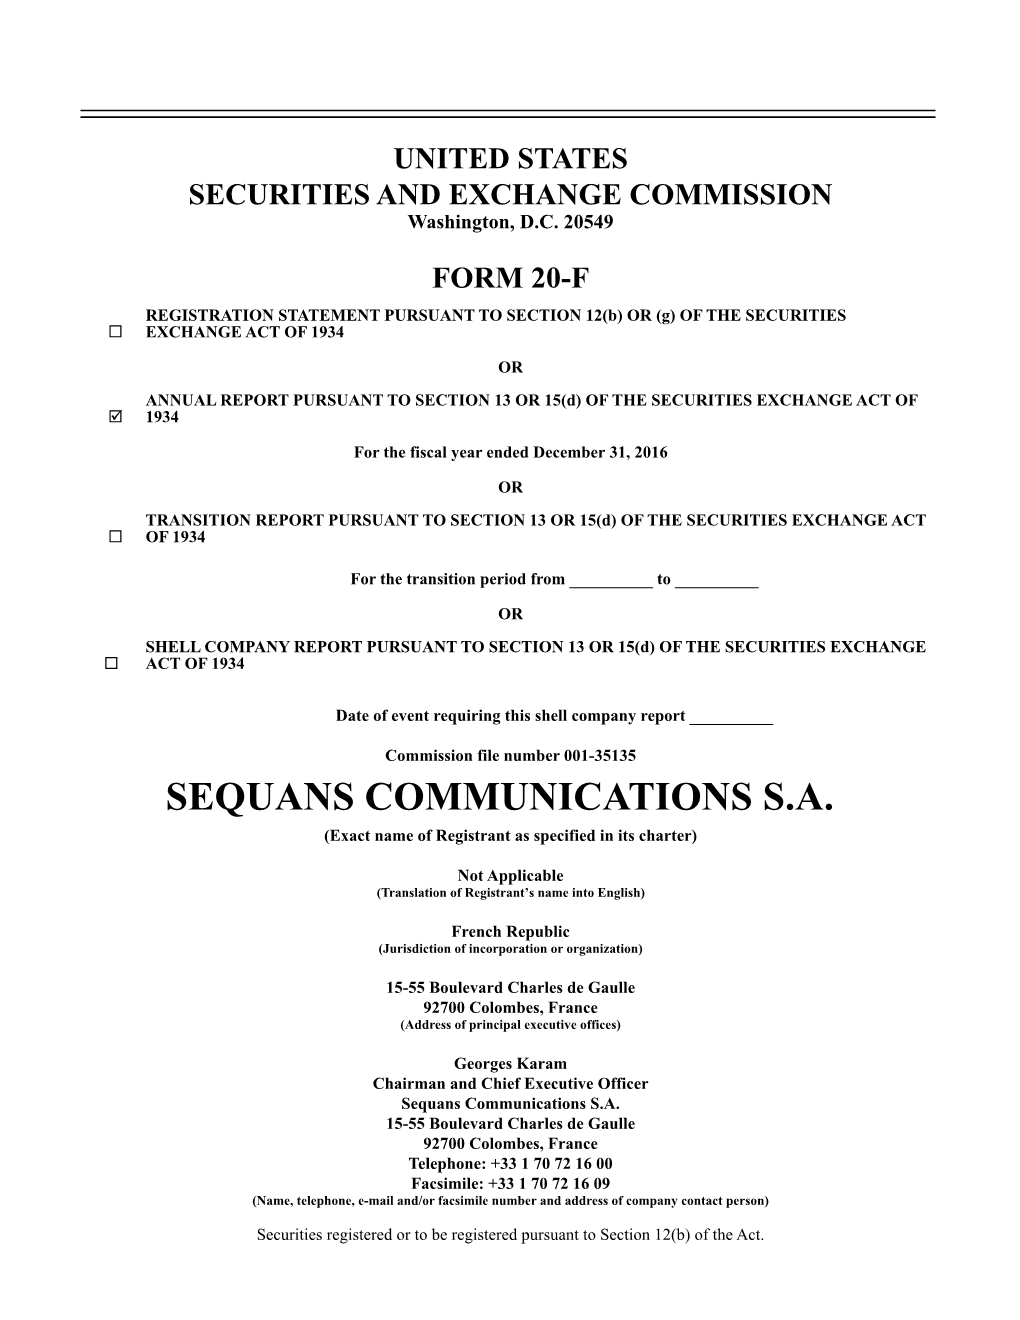 Sequans Communications-Form 20-F 2016